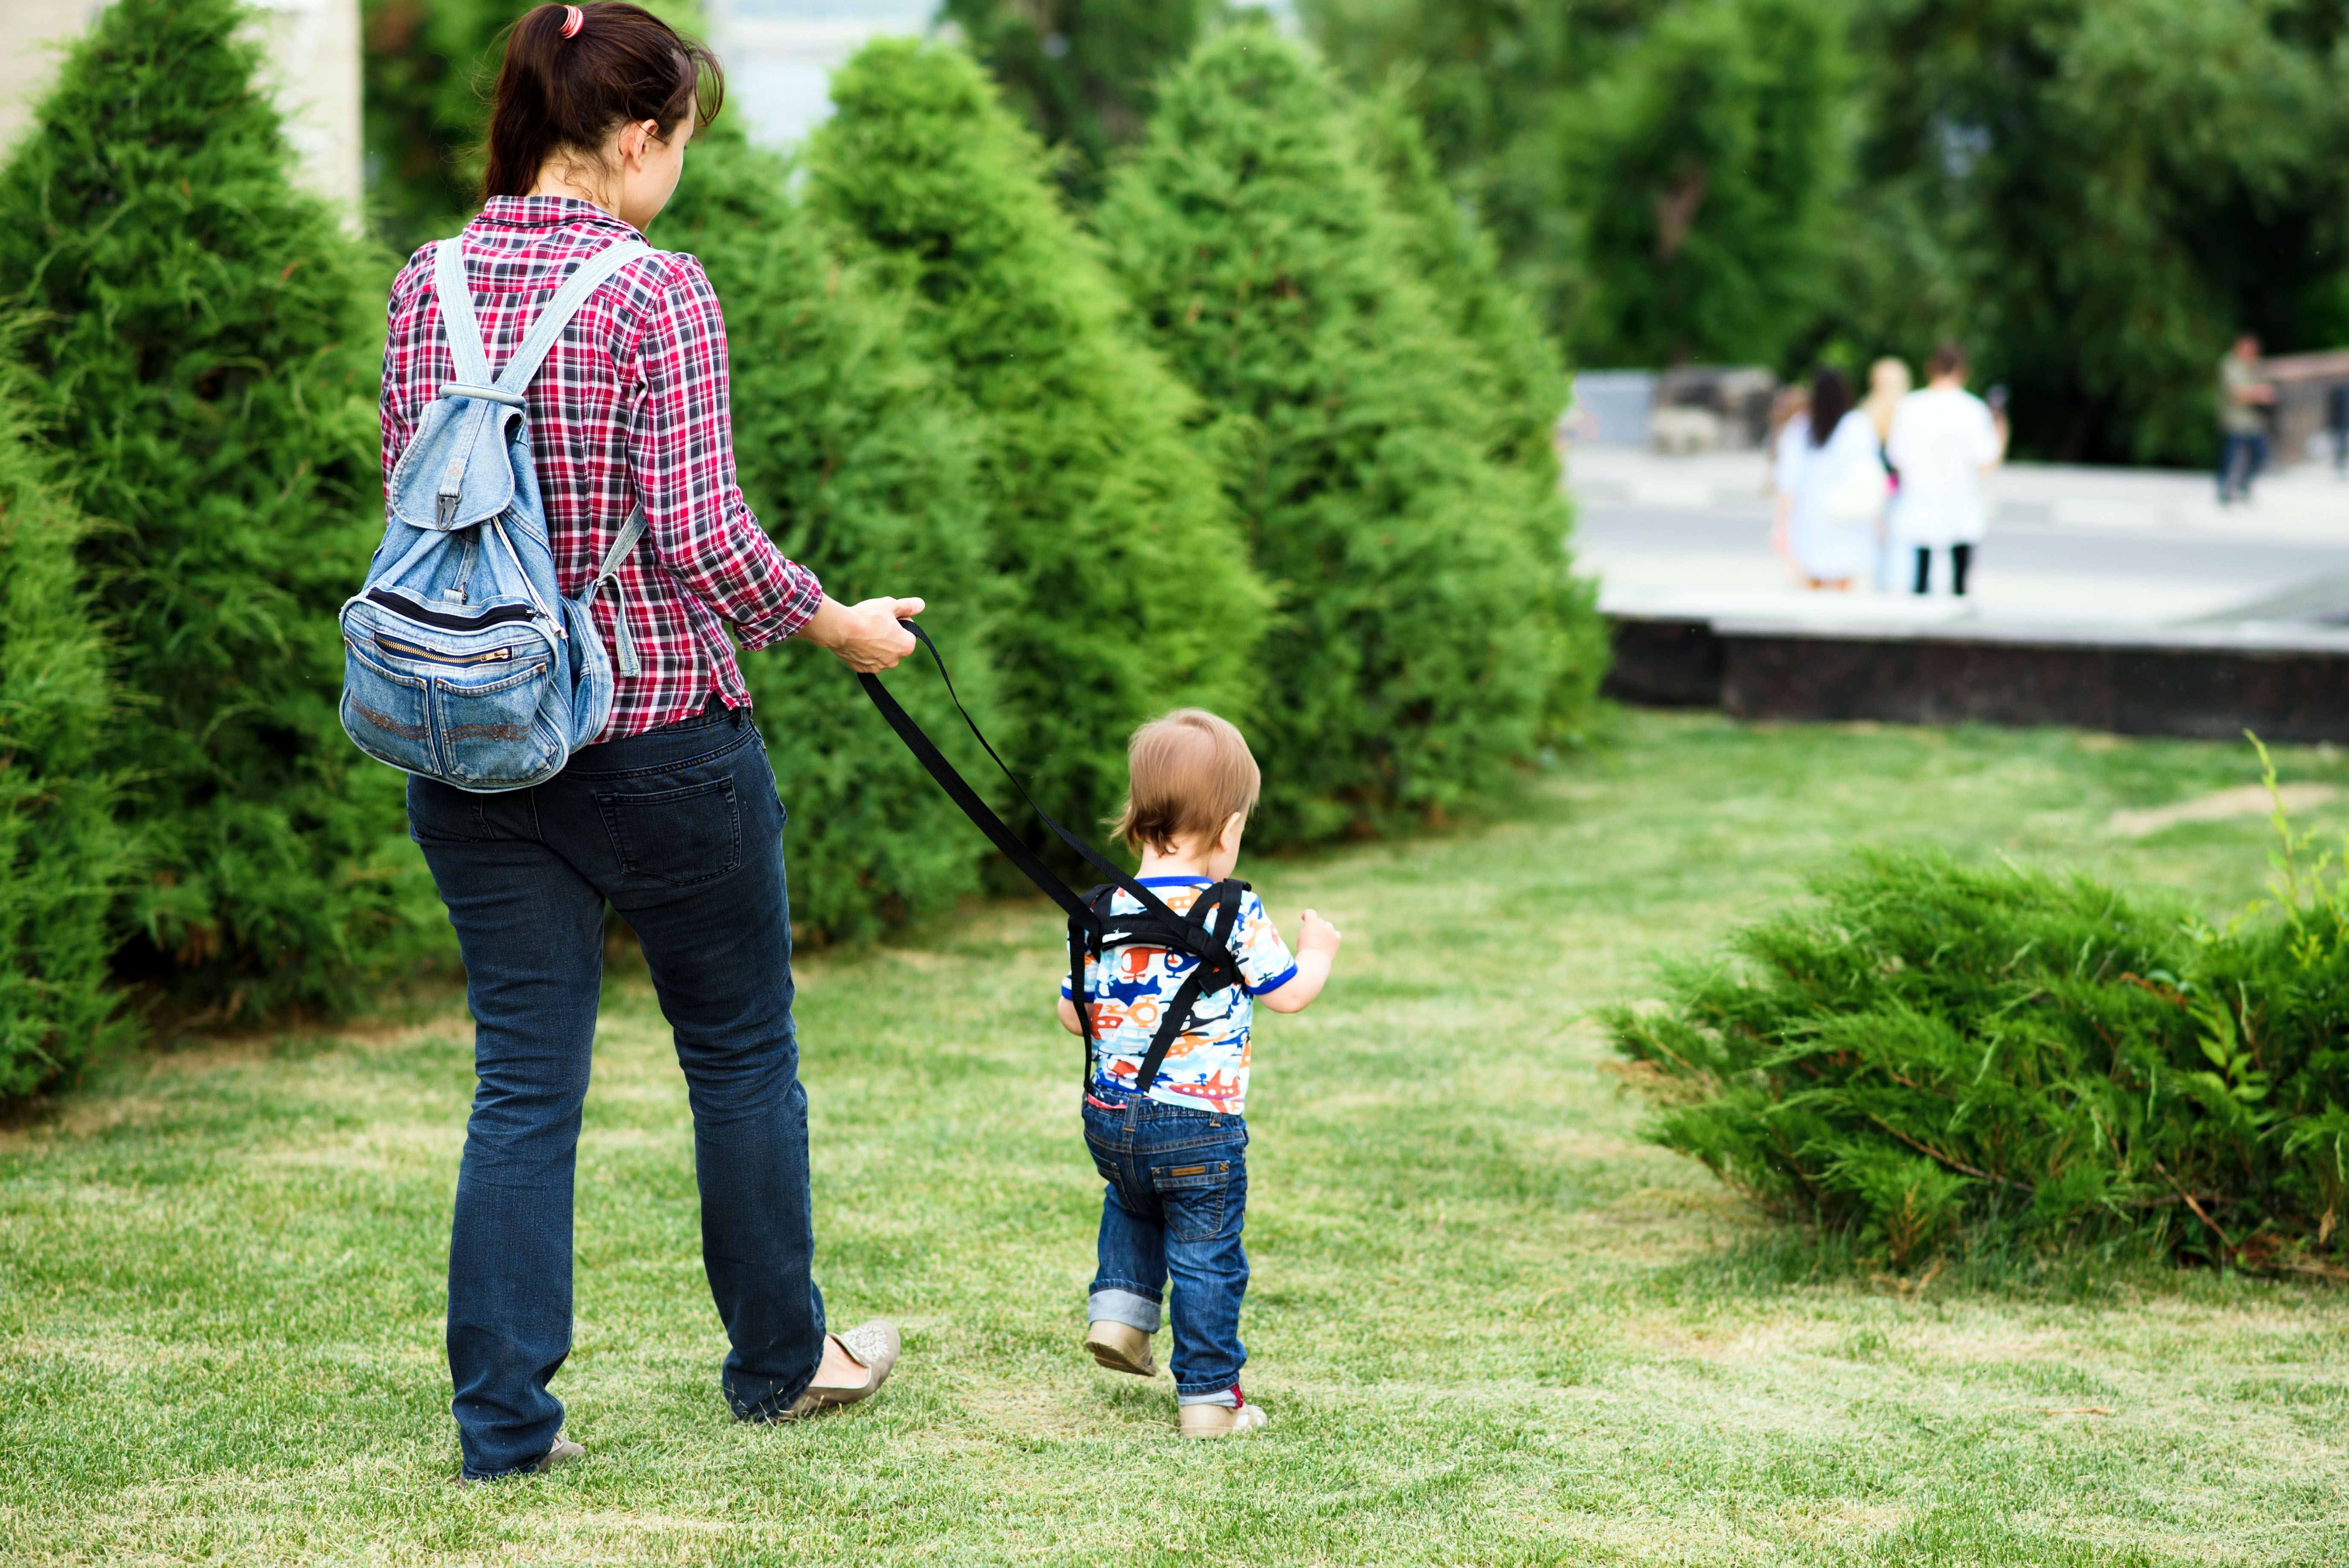 Blue Child Backpack Leash for Toddlers & Kids 98Inch Lengthen Child Safety Walking Leash